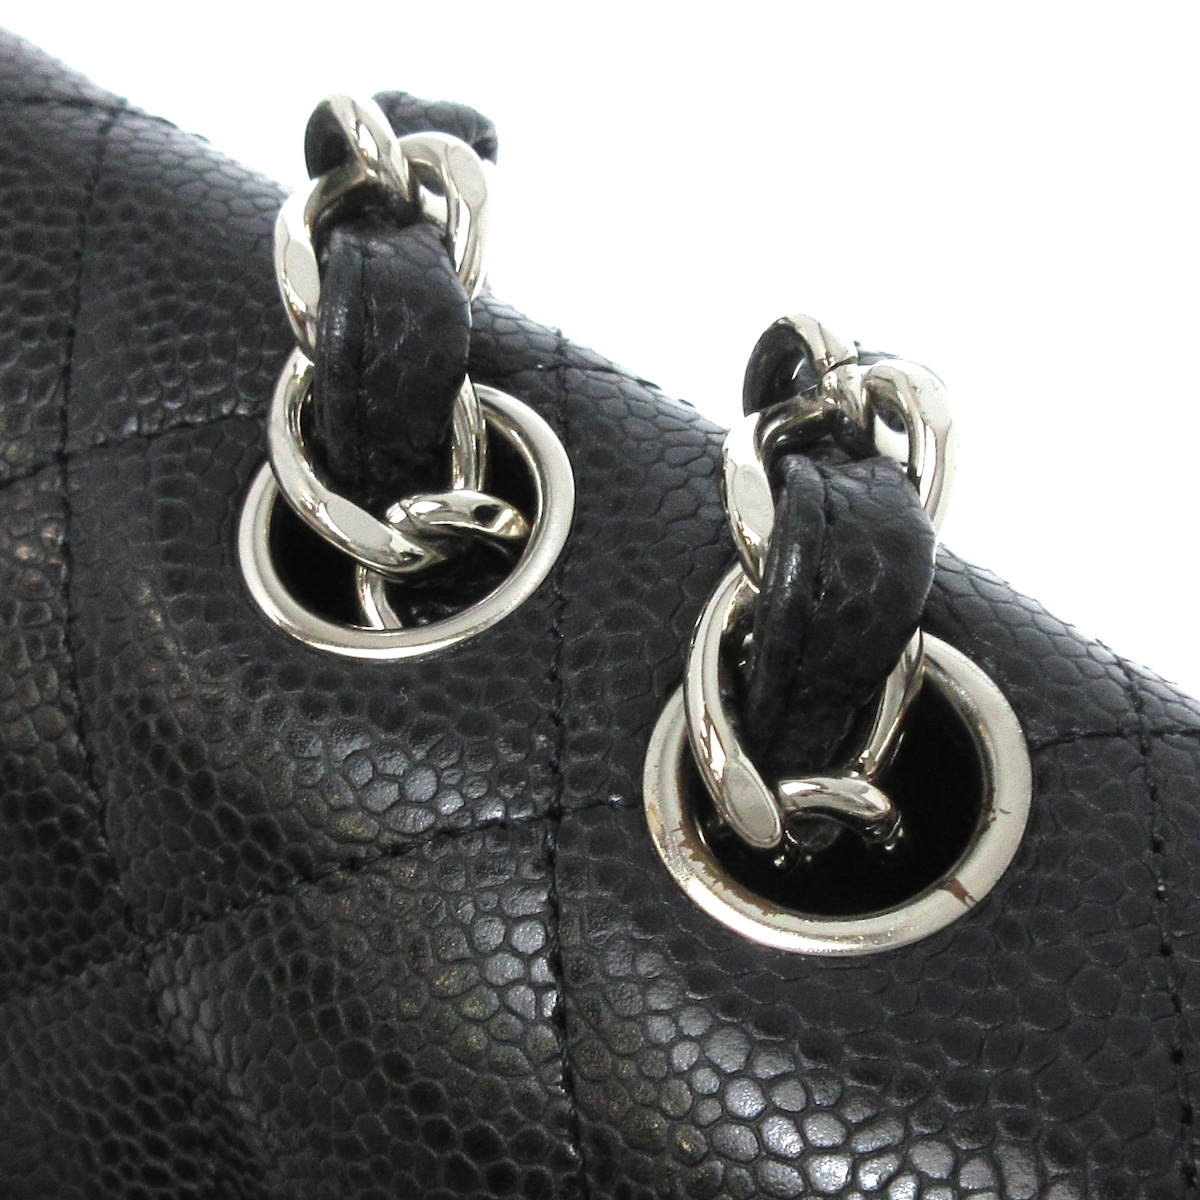 Chanel Black Leather Medium Classic Single Flap Bag